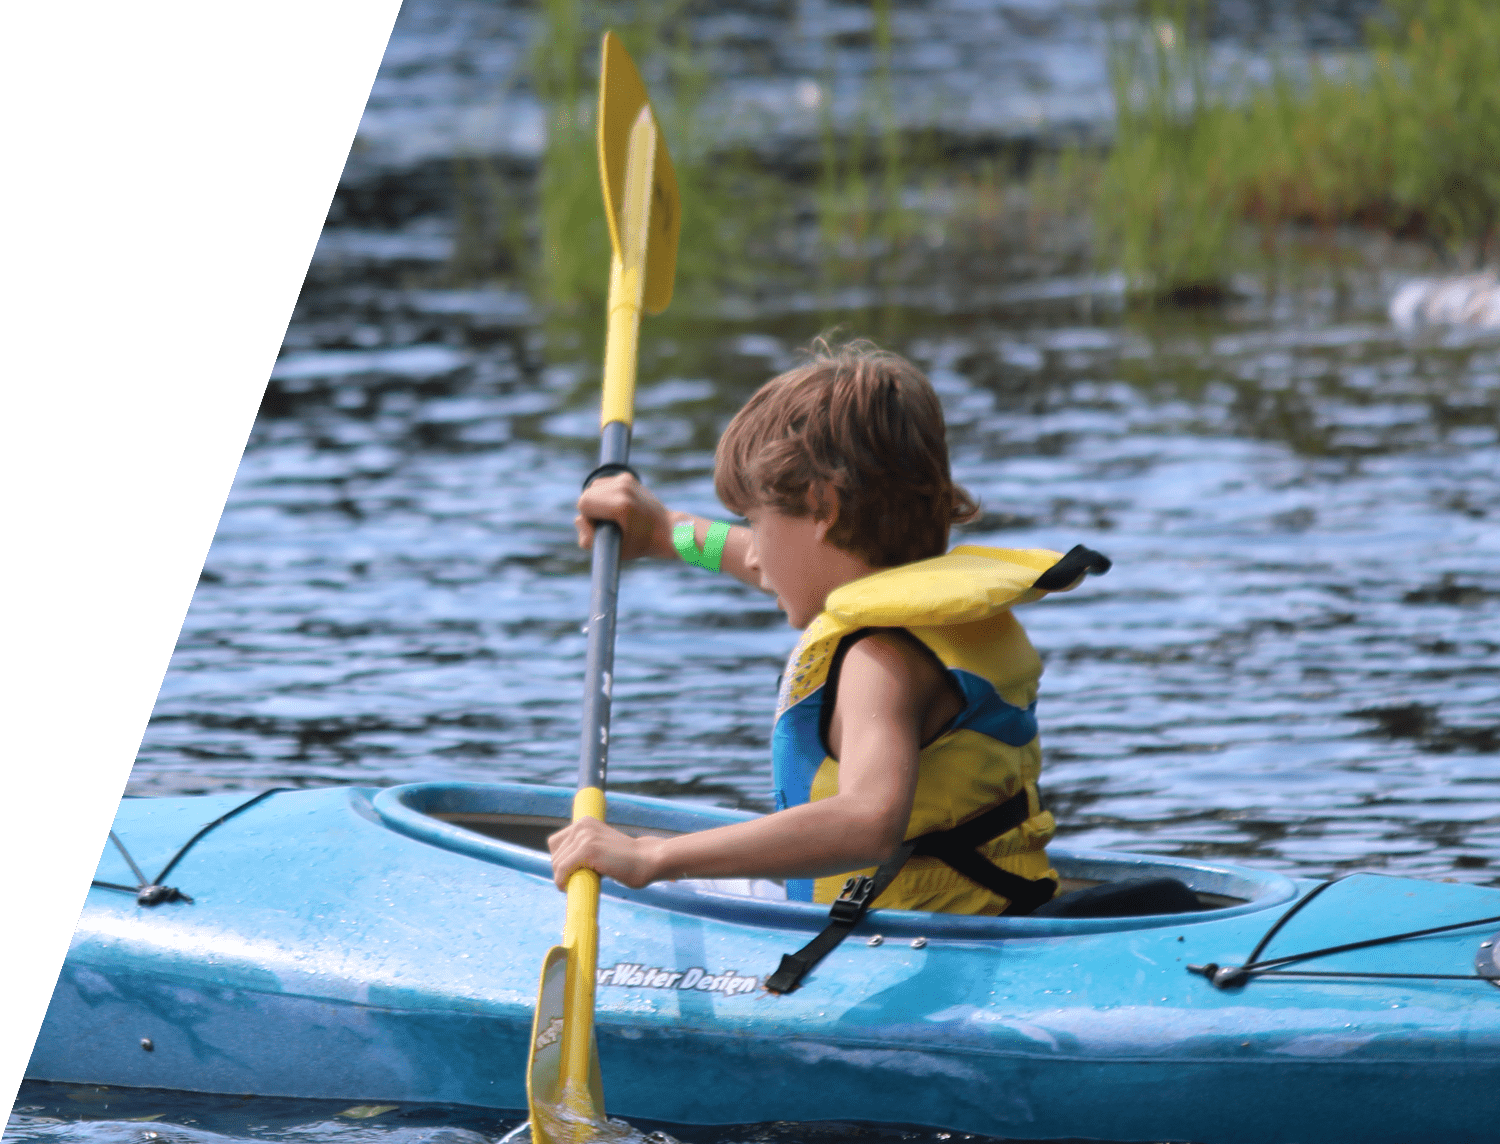 Child canoeing on the lake